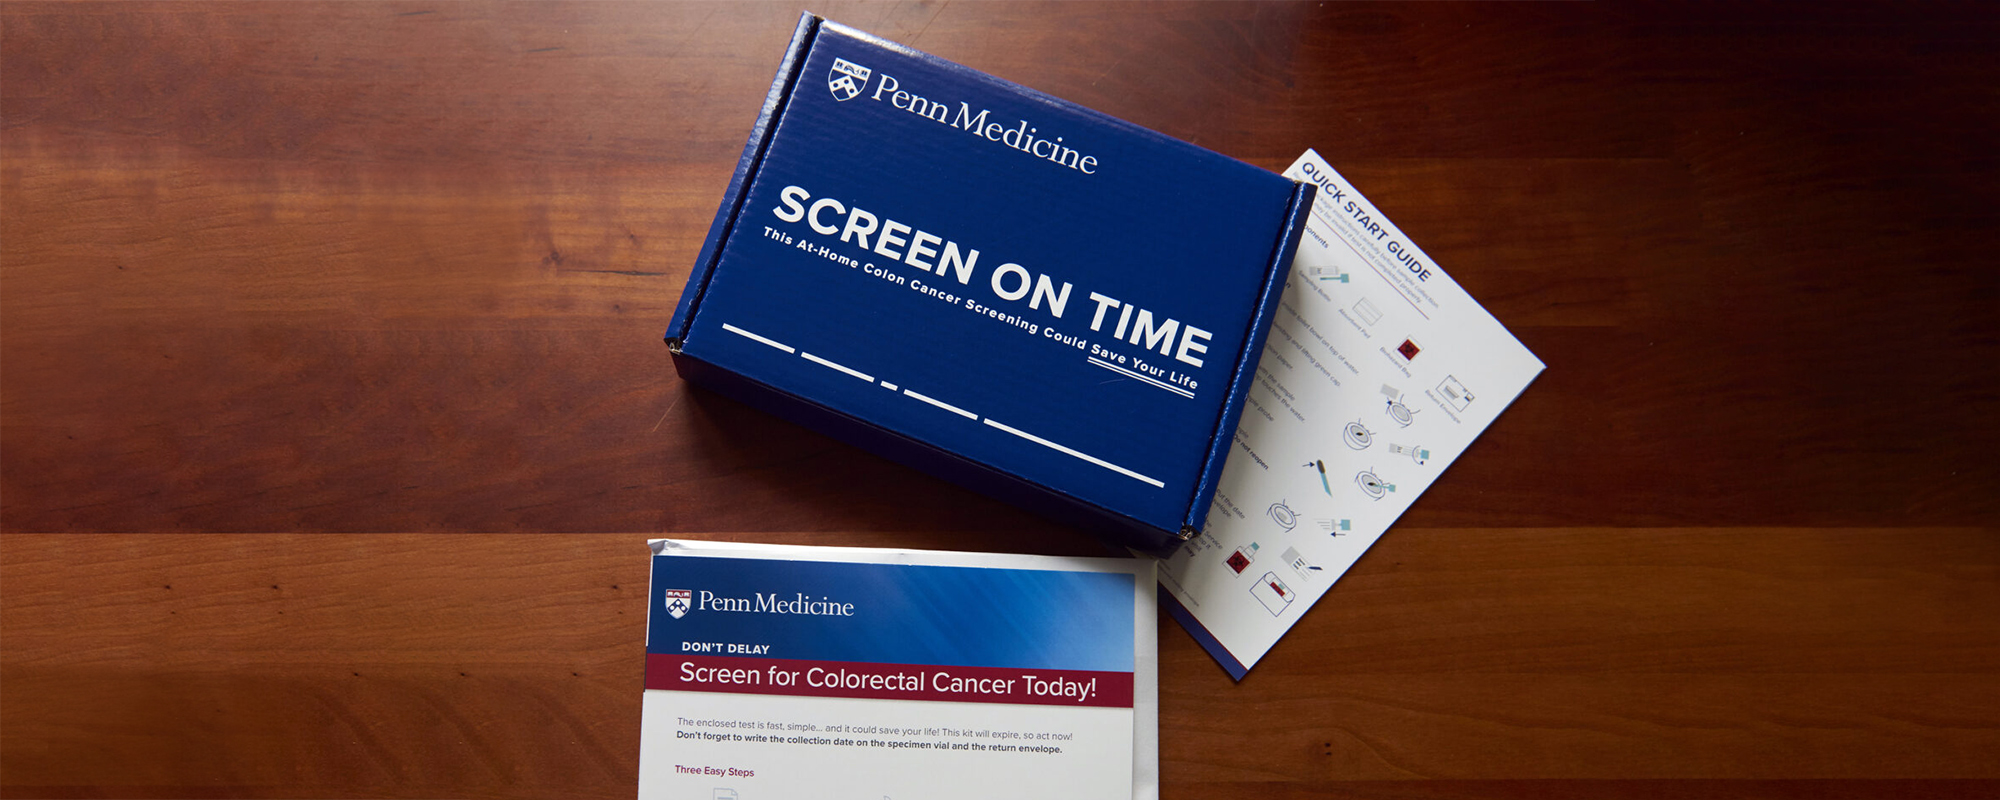 FIT screening kit with Penn Medicine packaging